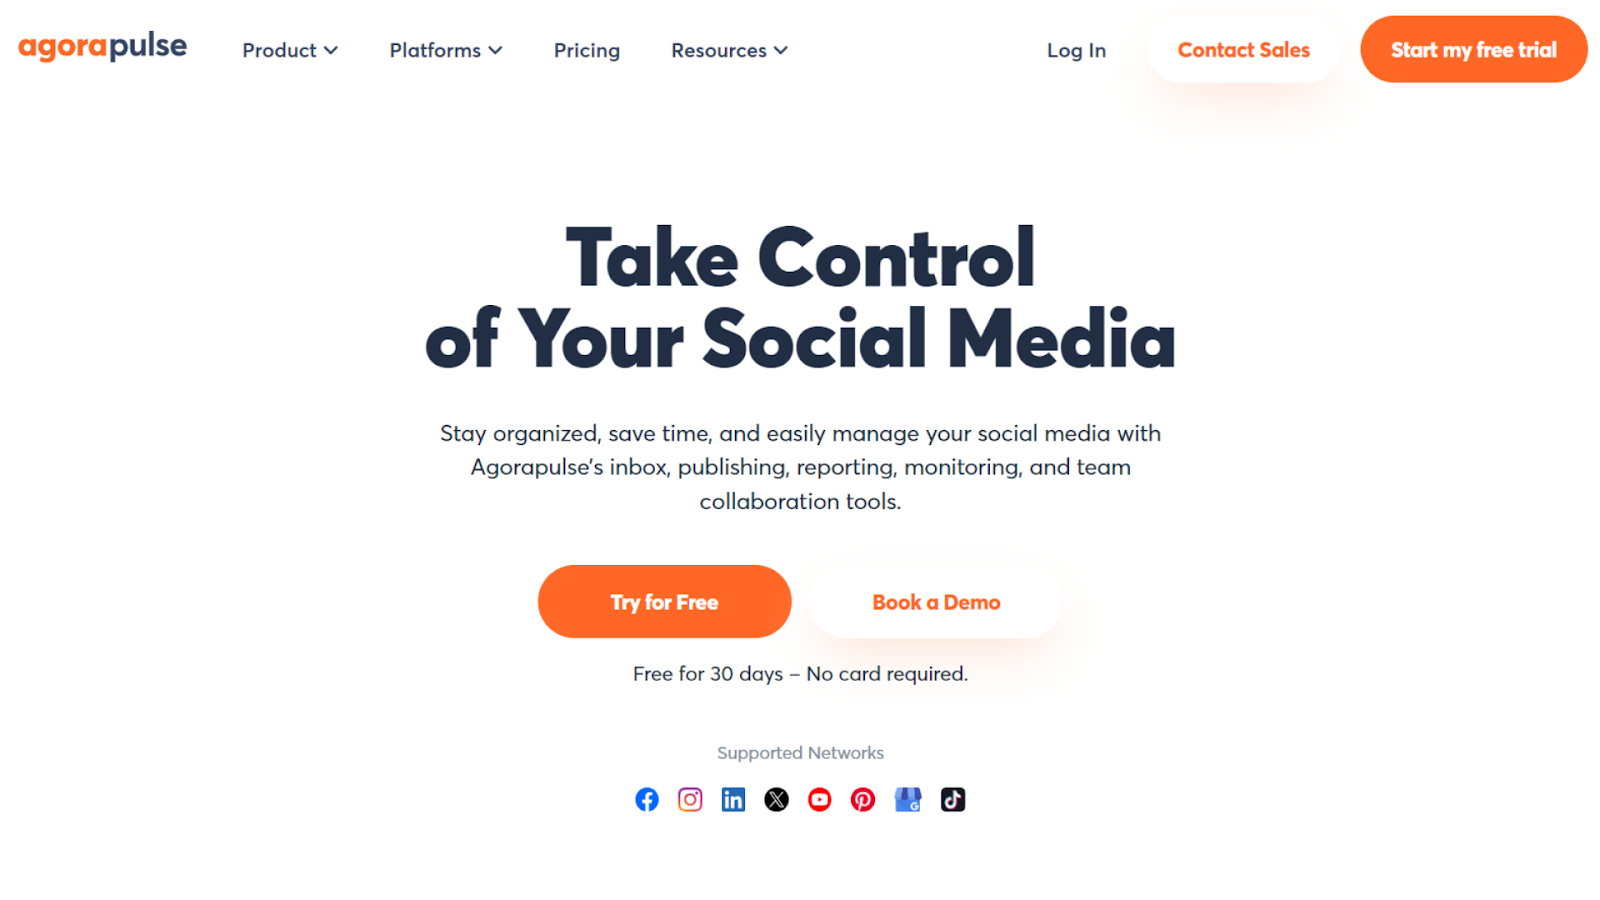 8. Agorapulse: Social Media Marketing Tools